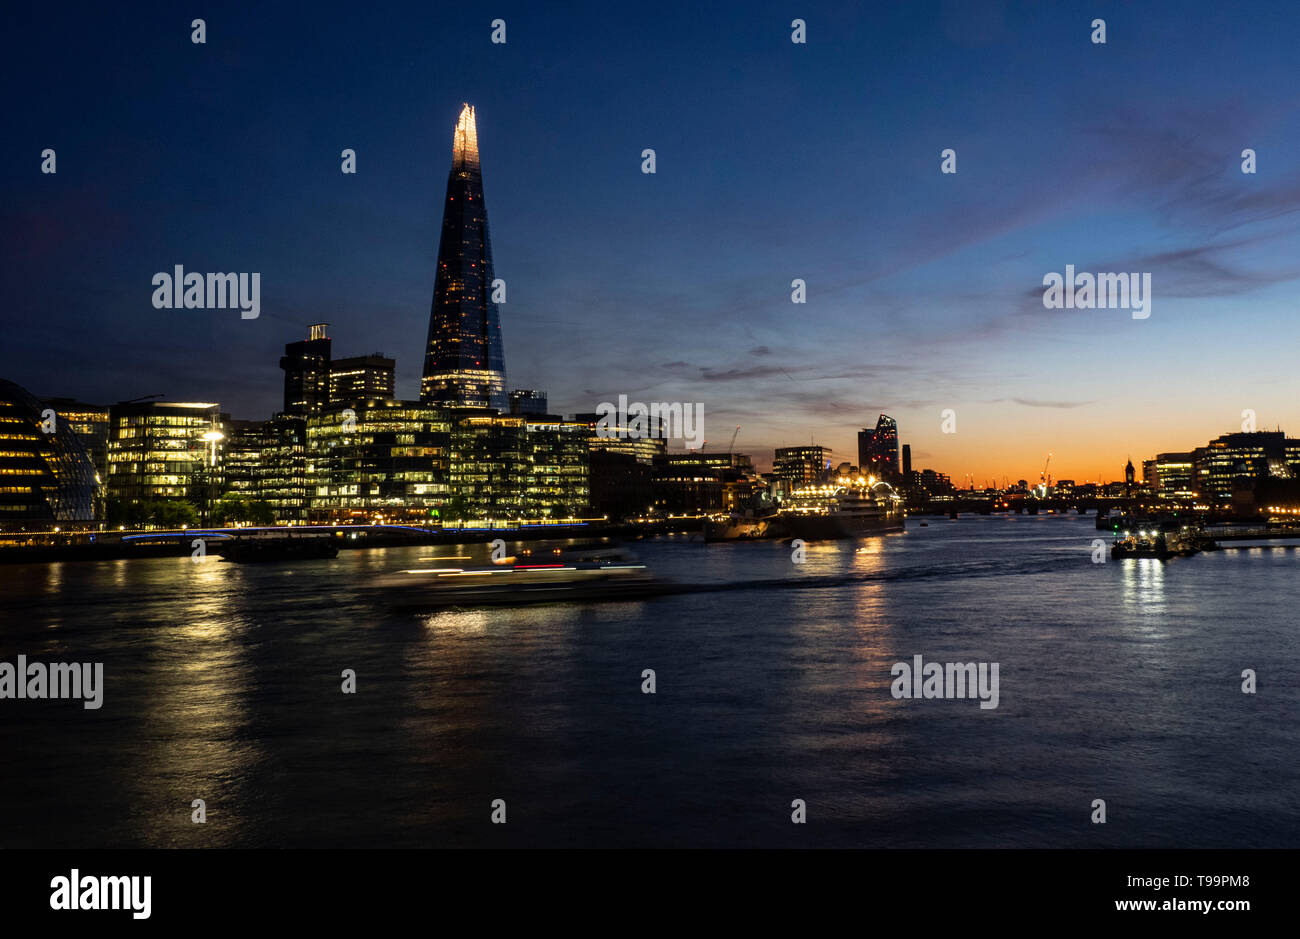 London landscape on Tamigi in the night Stock Photo